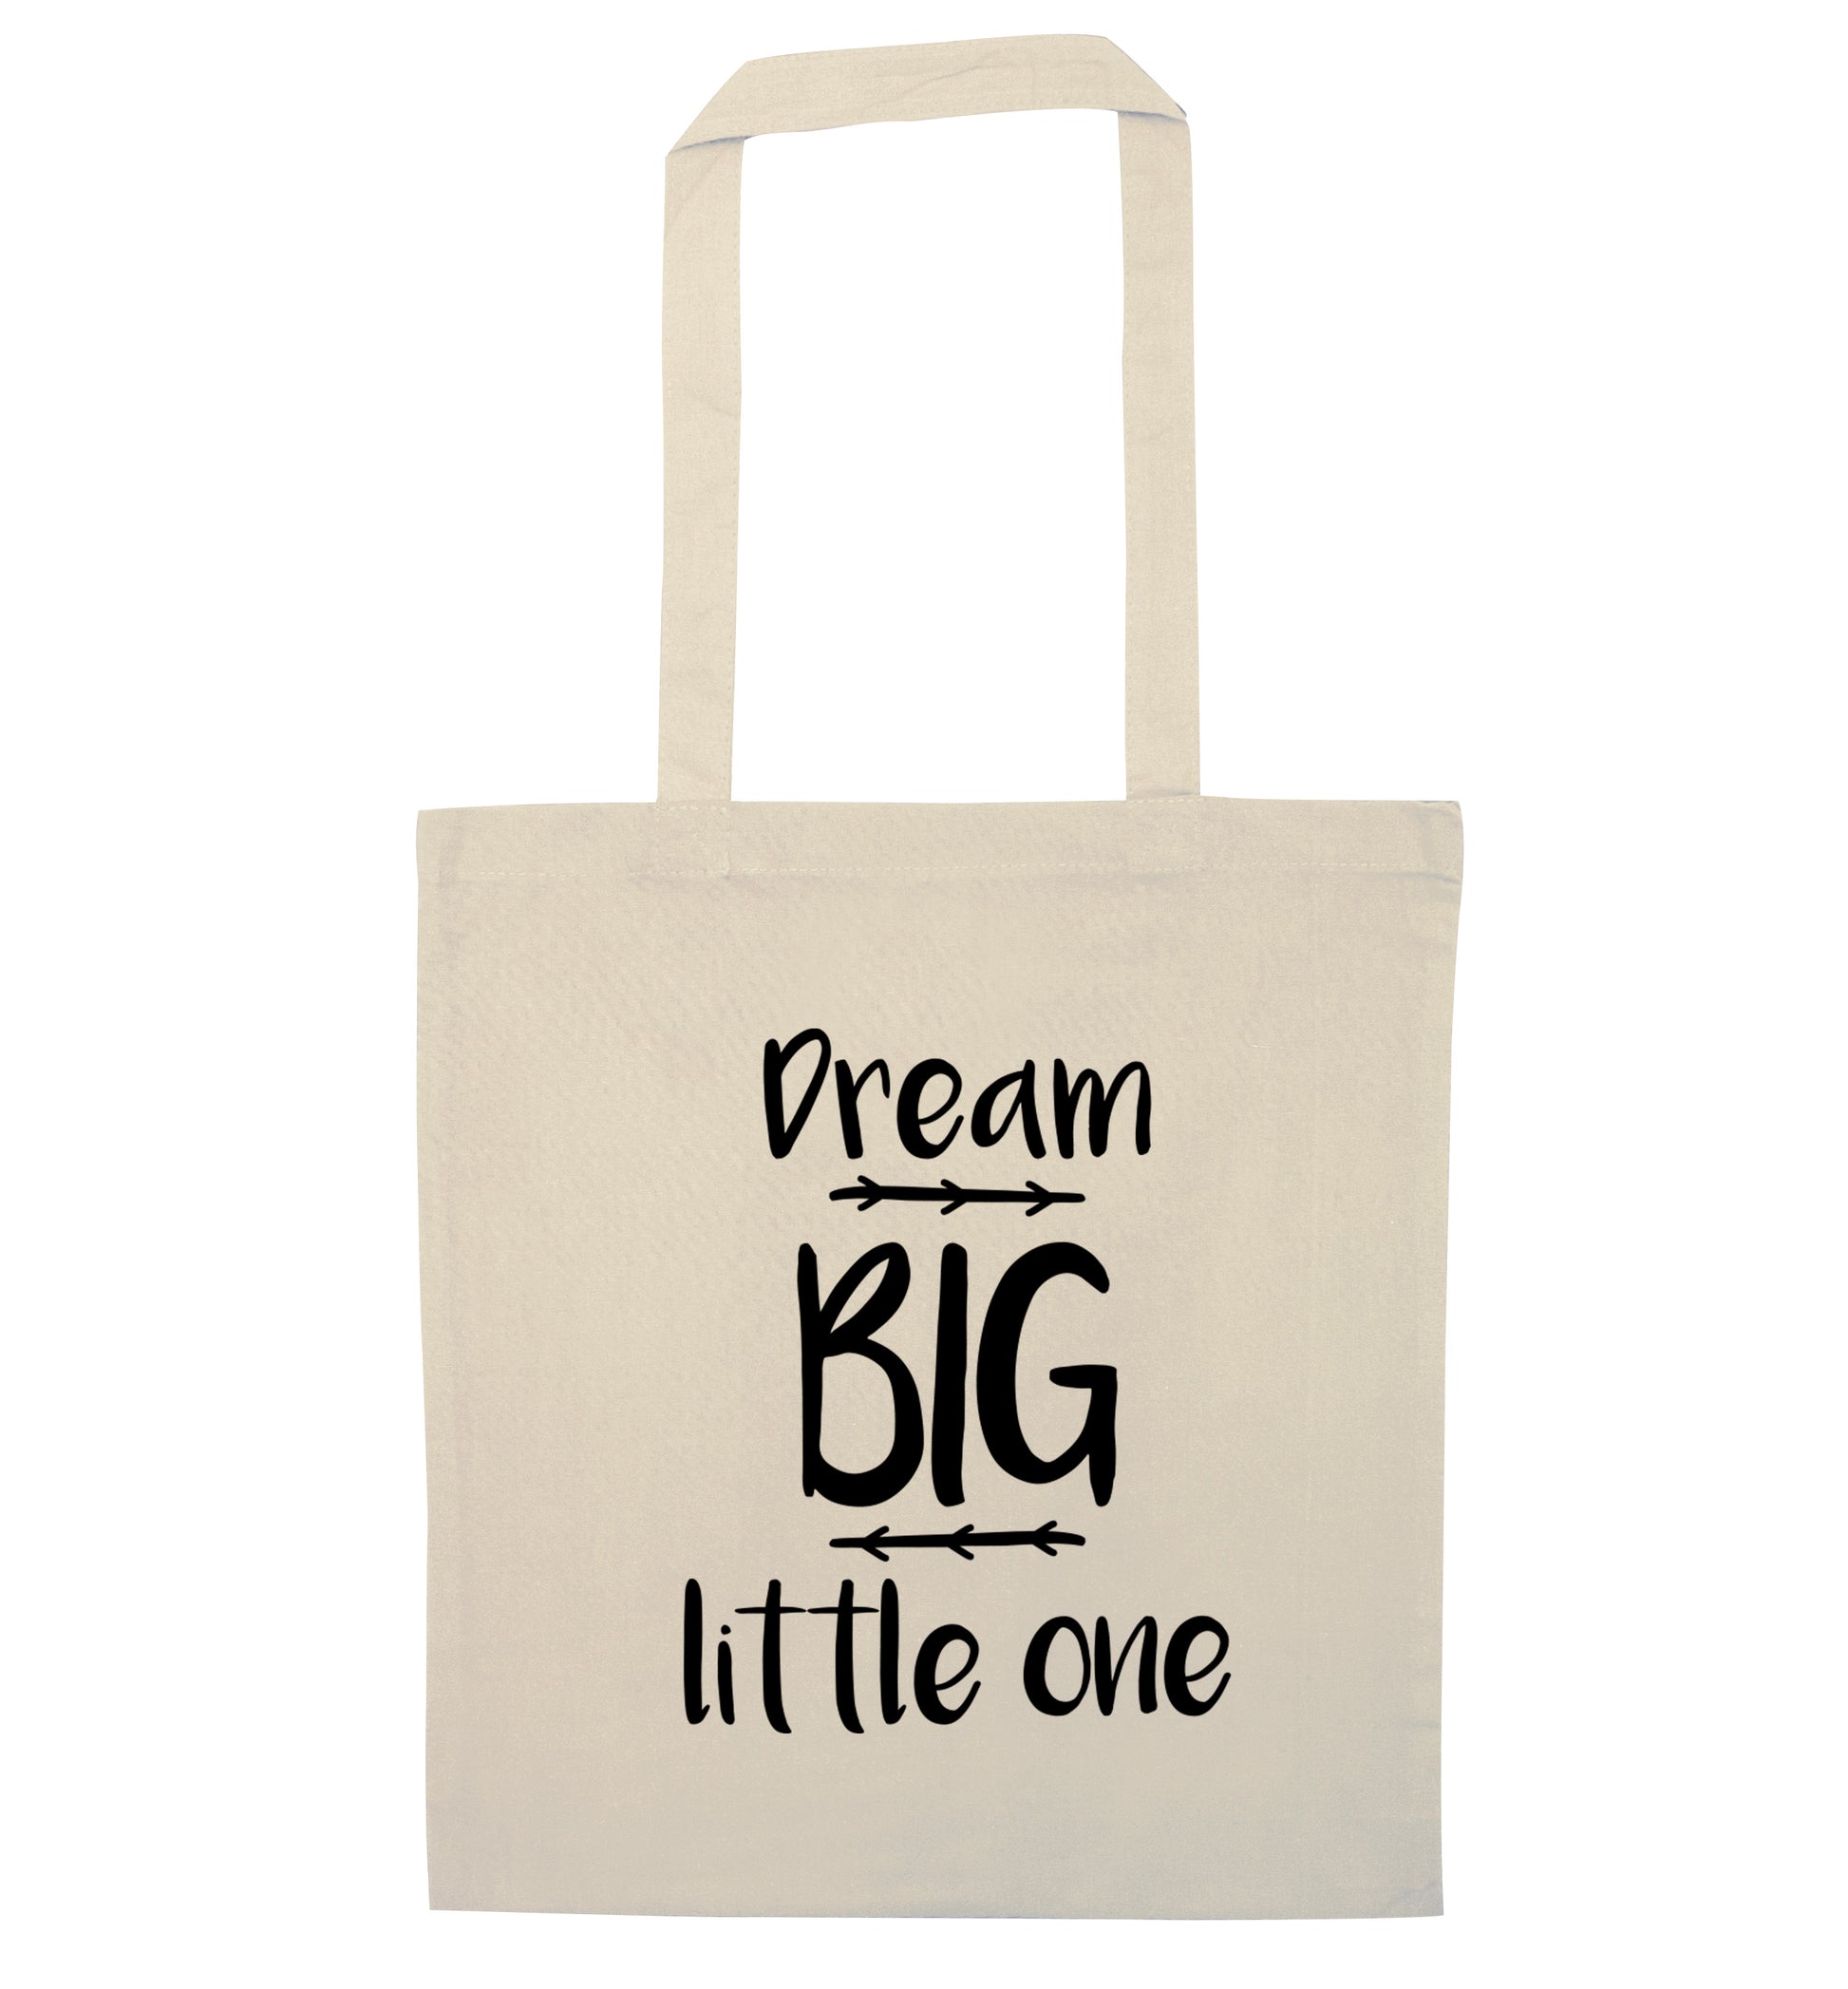 Dream big little one natural tote bag